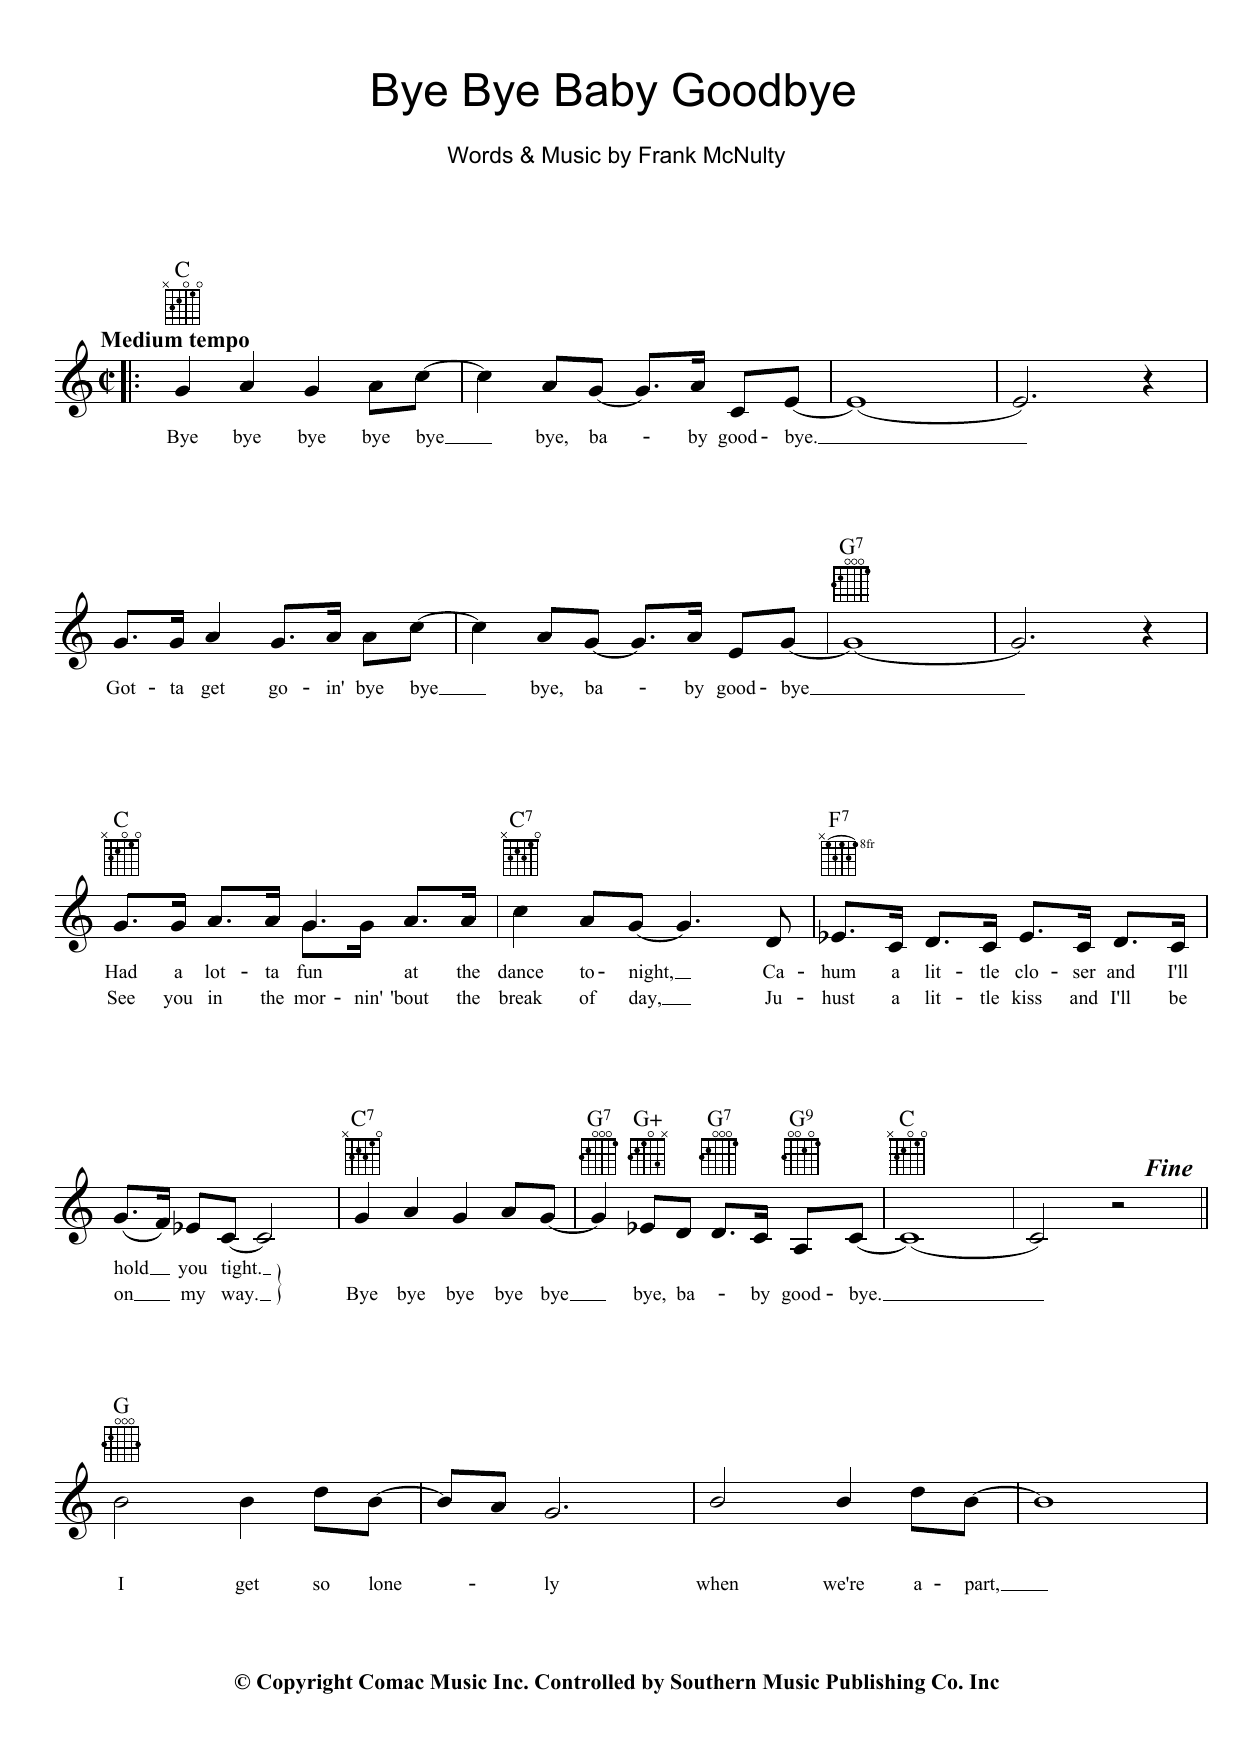 Col Joye Bye Bye Baby Goodbye Sheet Music Notes & Chords for Melody Line, Lyrics & Chords - Download or Print PDF